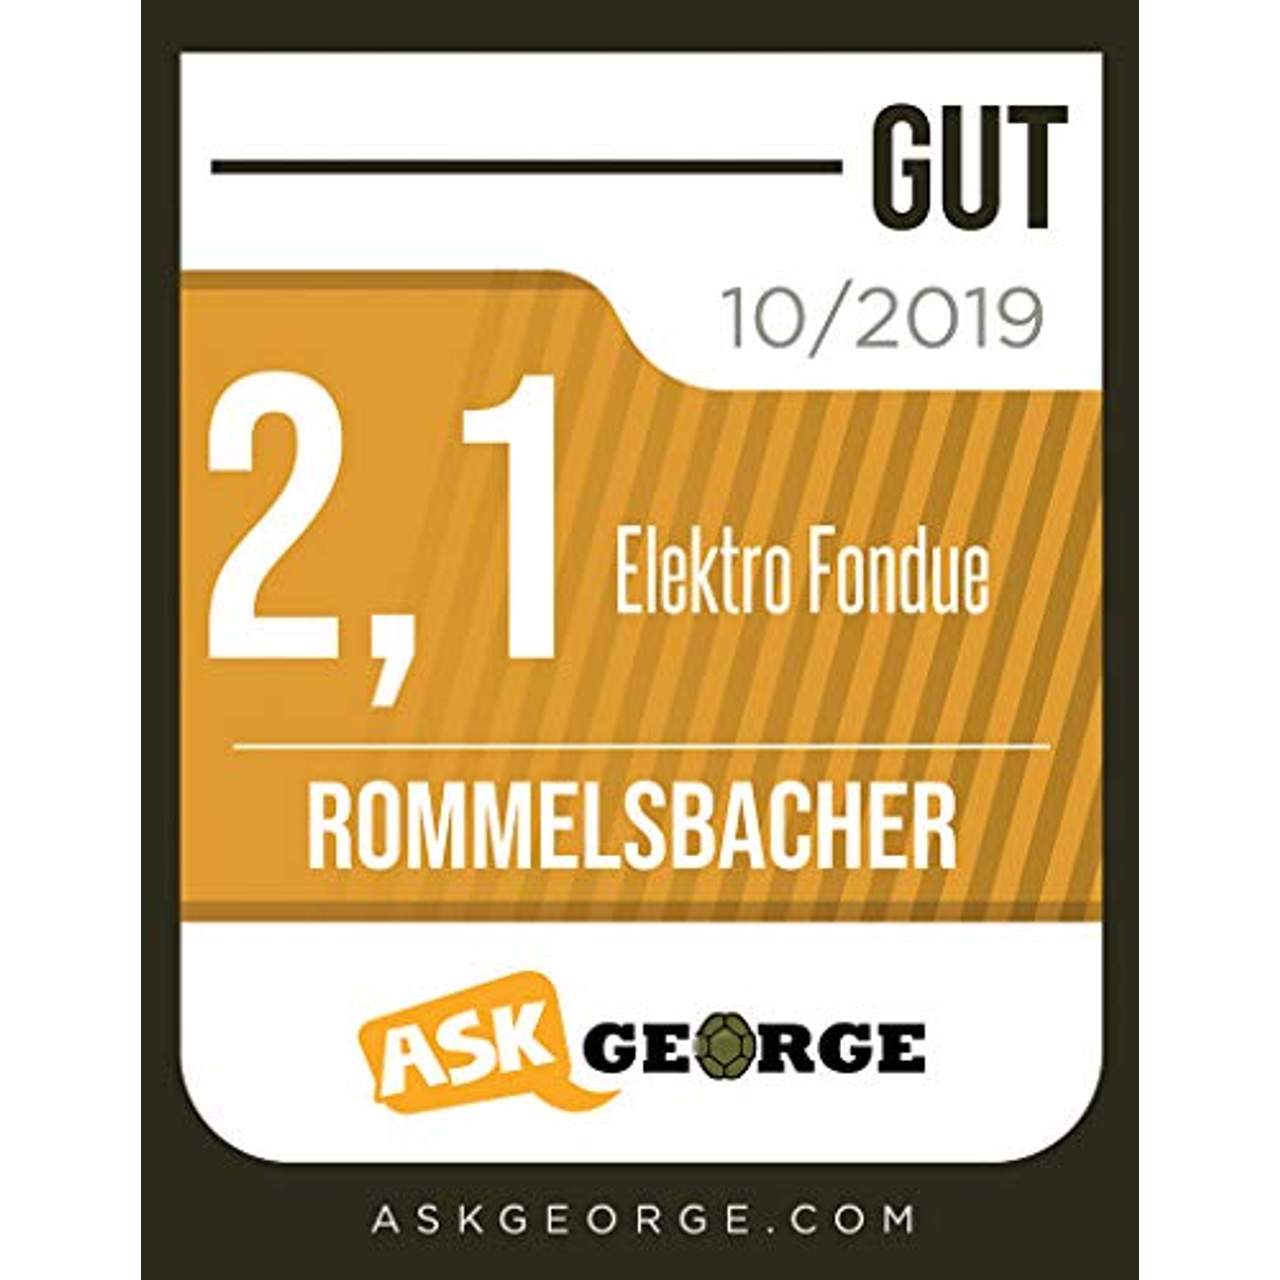 Rommelsbacher Fondue Edelstahl schwarz